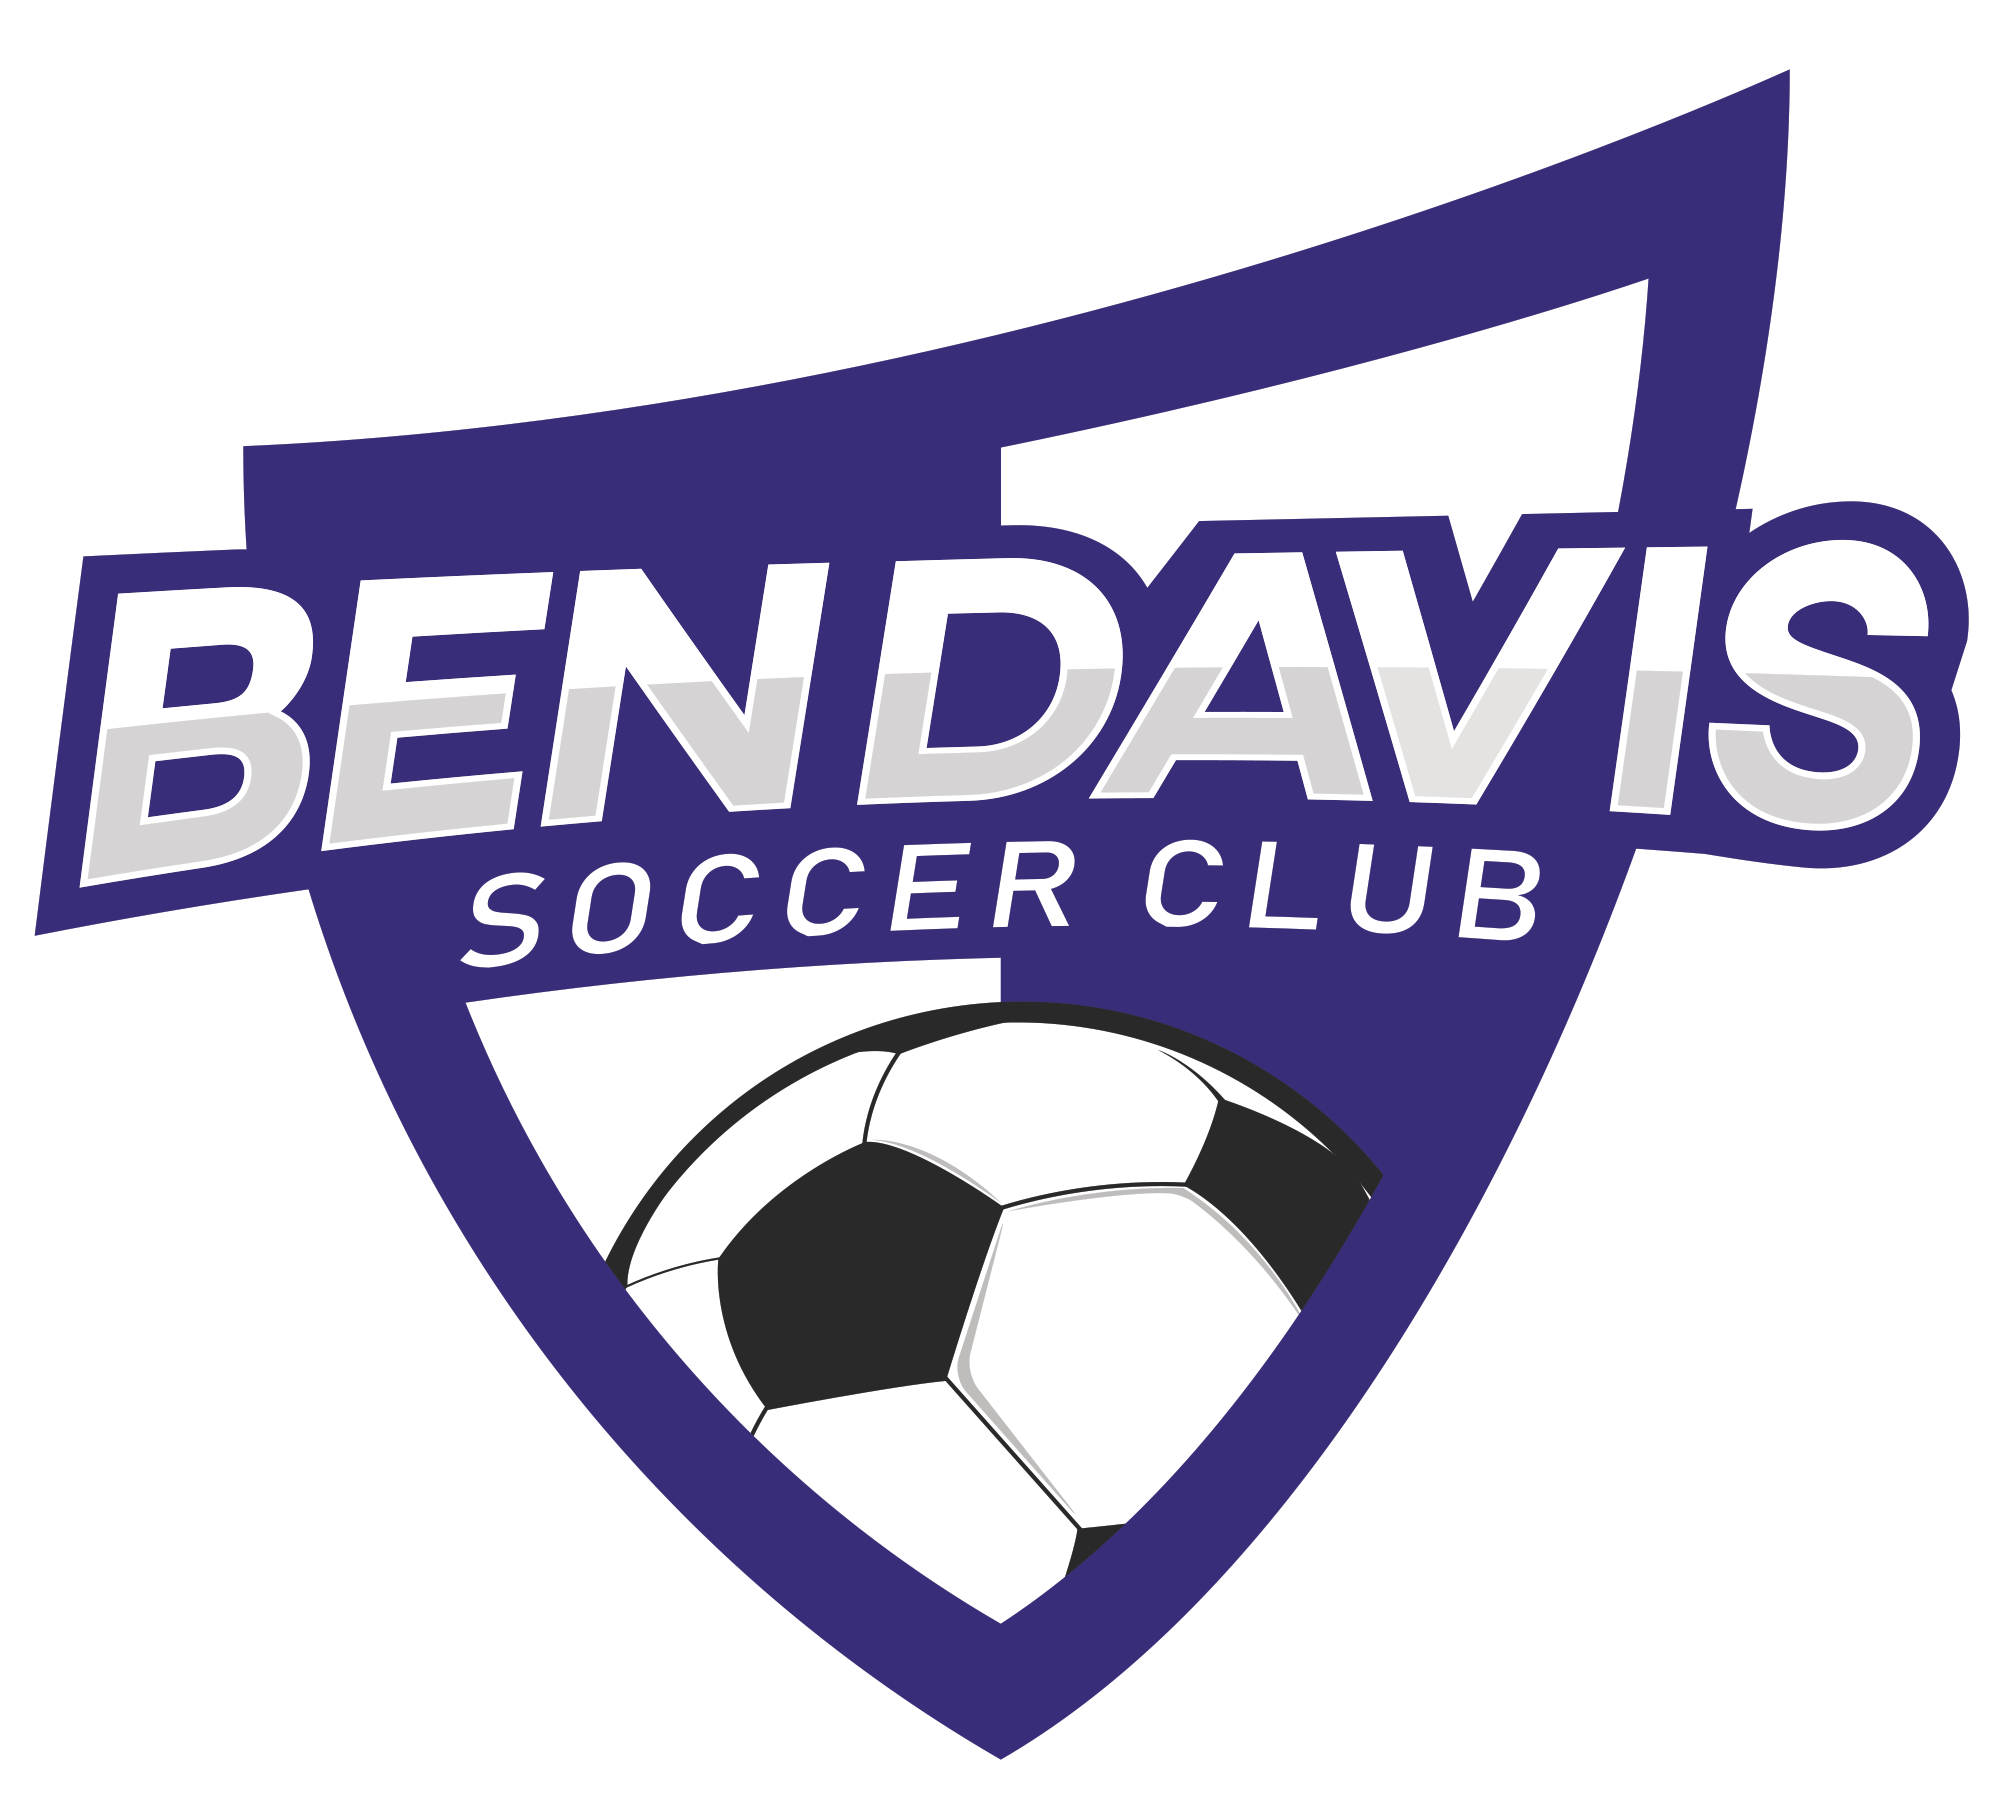 Ben Davis Soccer Club team badge